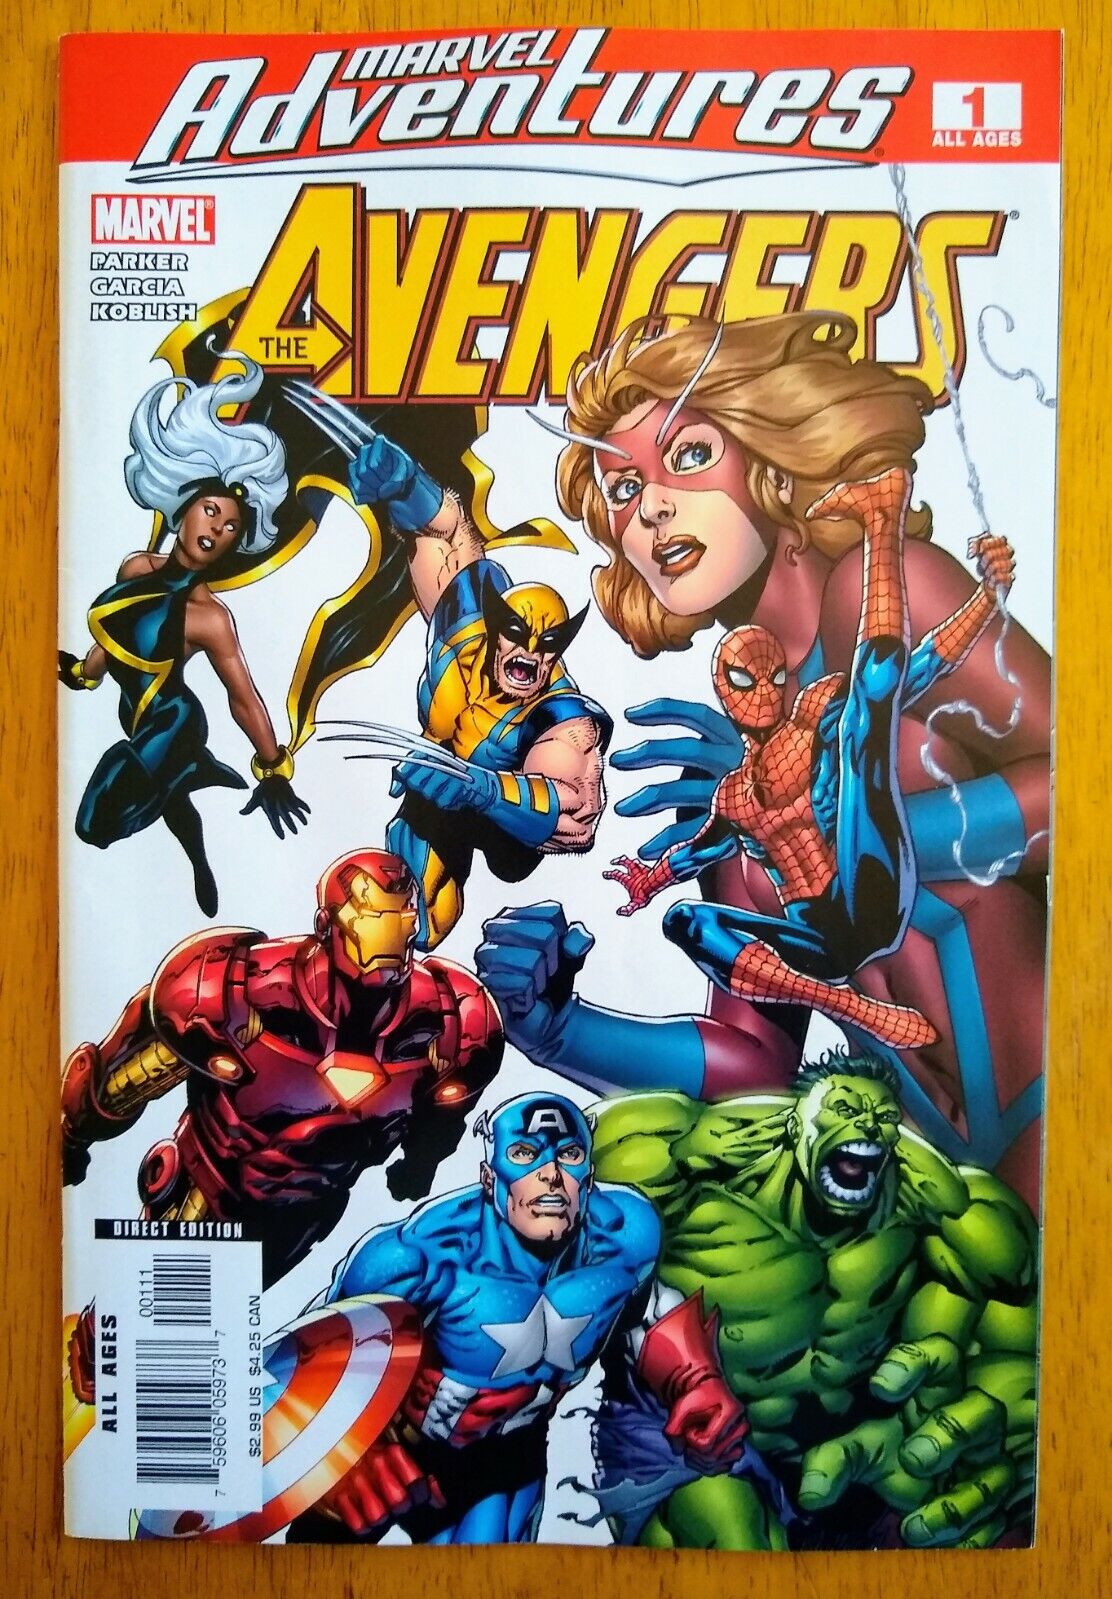 Marvel Adventures -The Avengers #1 MCU Comic Book 2006 Parker, Garcia, Koblish.